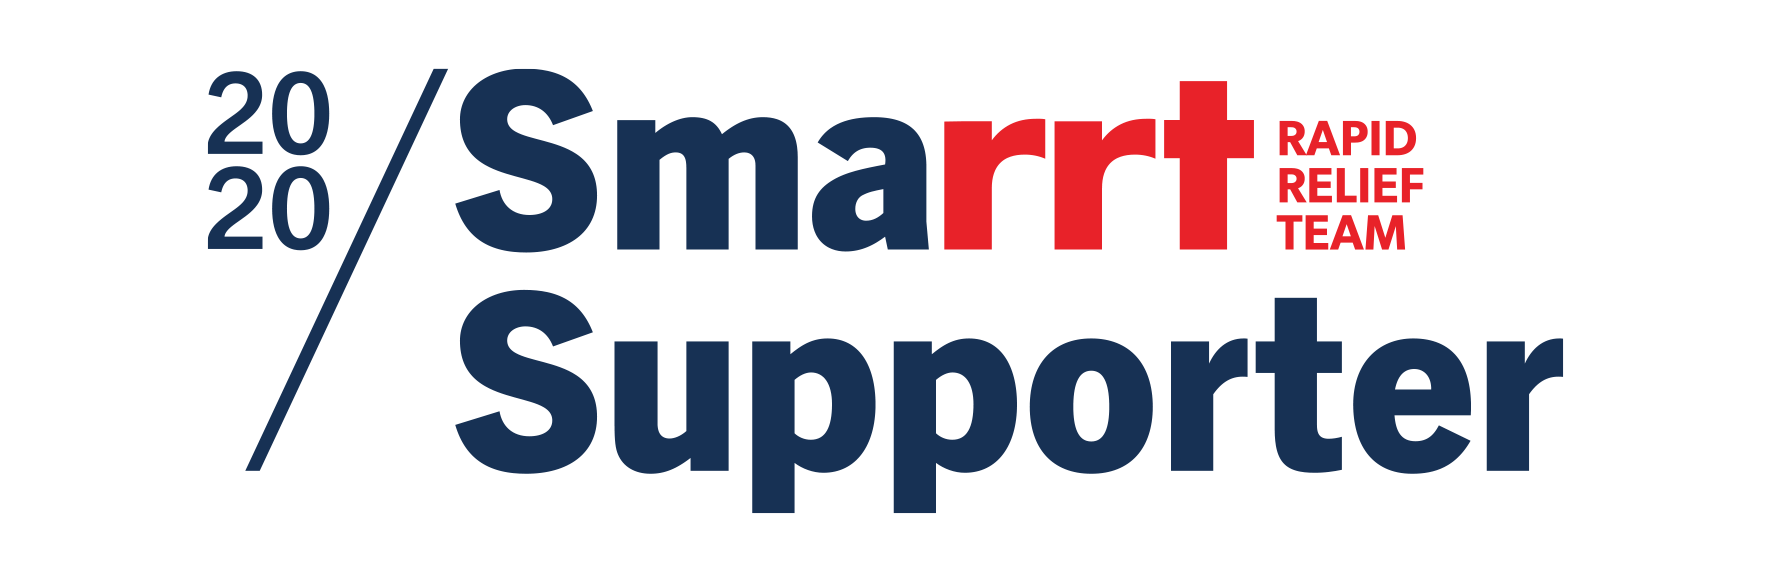 RRT (Rapid Relief Team) 2020 Sma"rrt" Supporter Logo